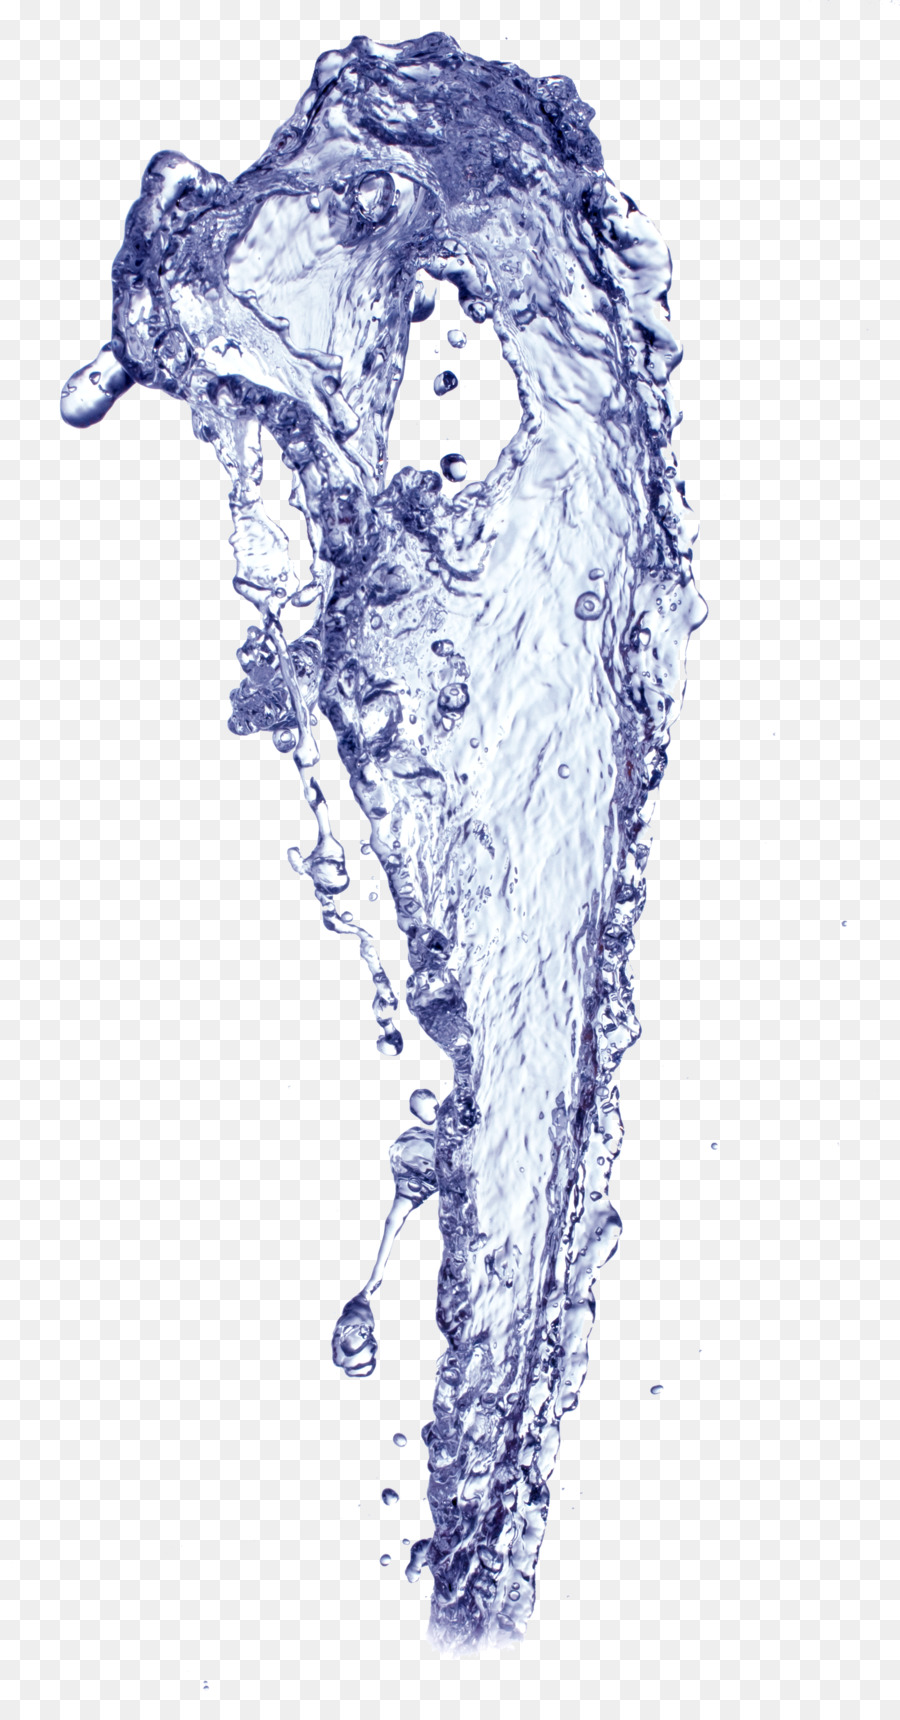 Goccia d'acqua Clip art - goccioline